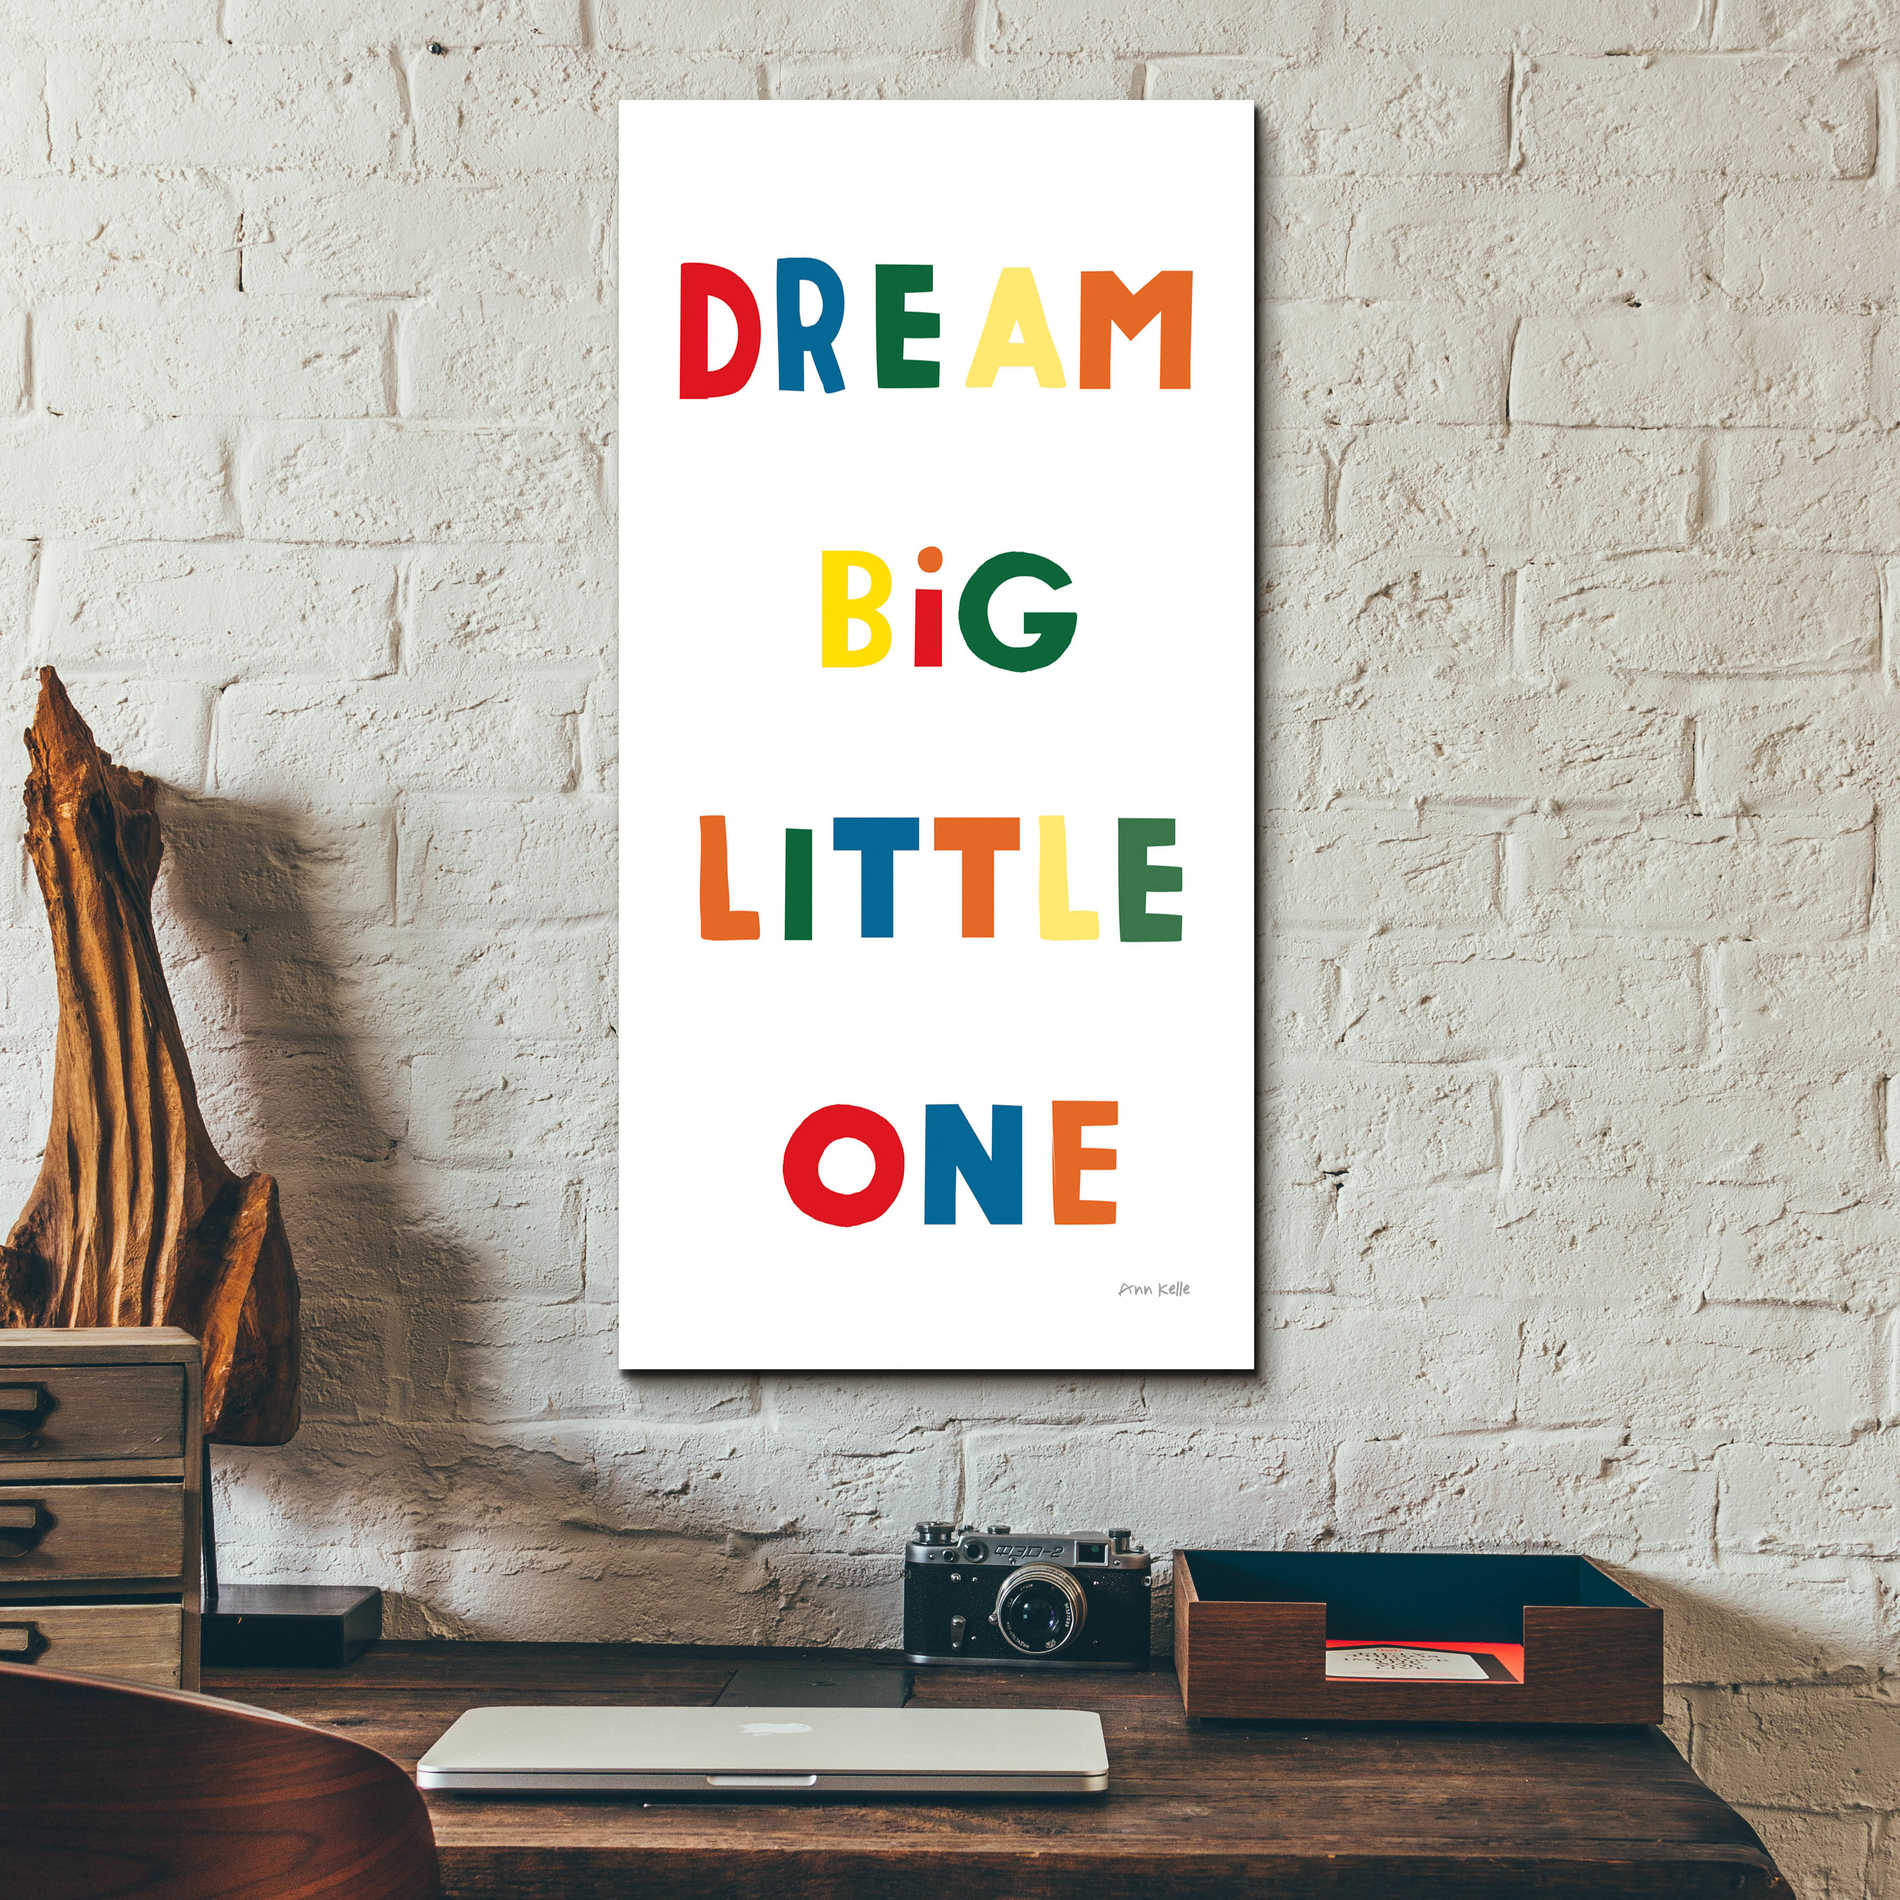 Epic Art 'Dream Big Little One Bright' by Ann Kelle Designs, Acrylic Glass Wall Art,12x24